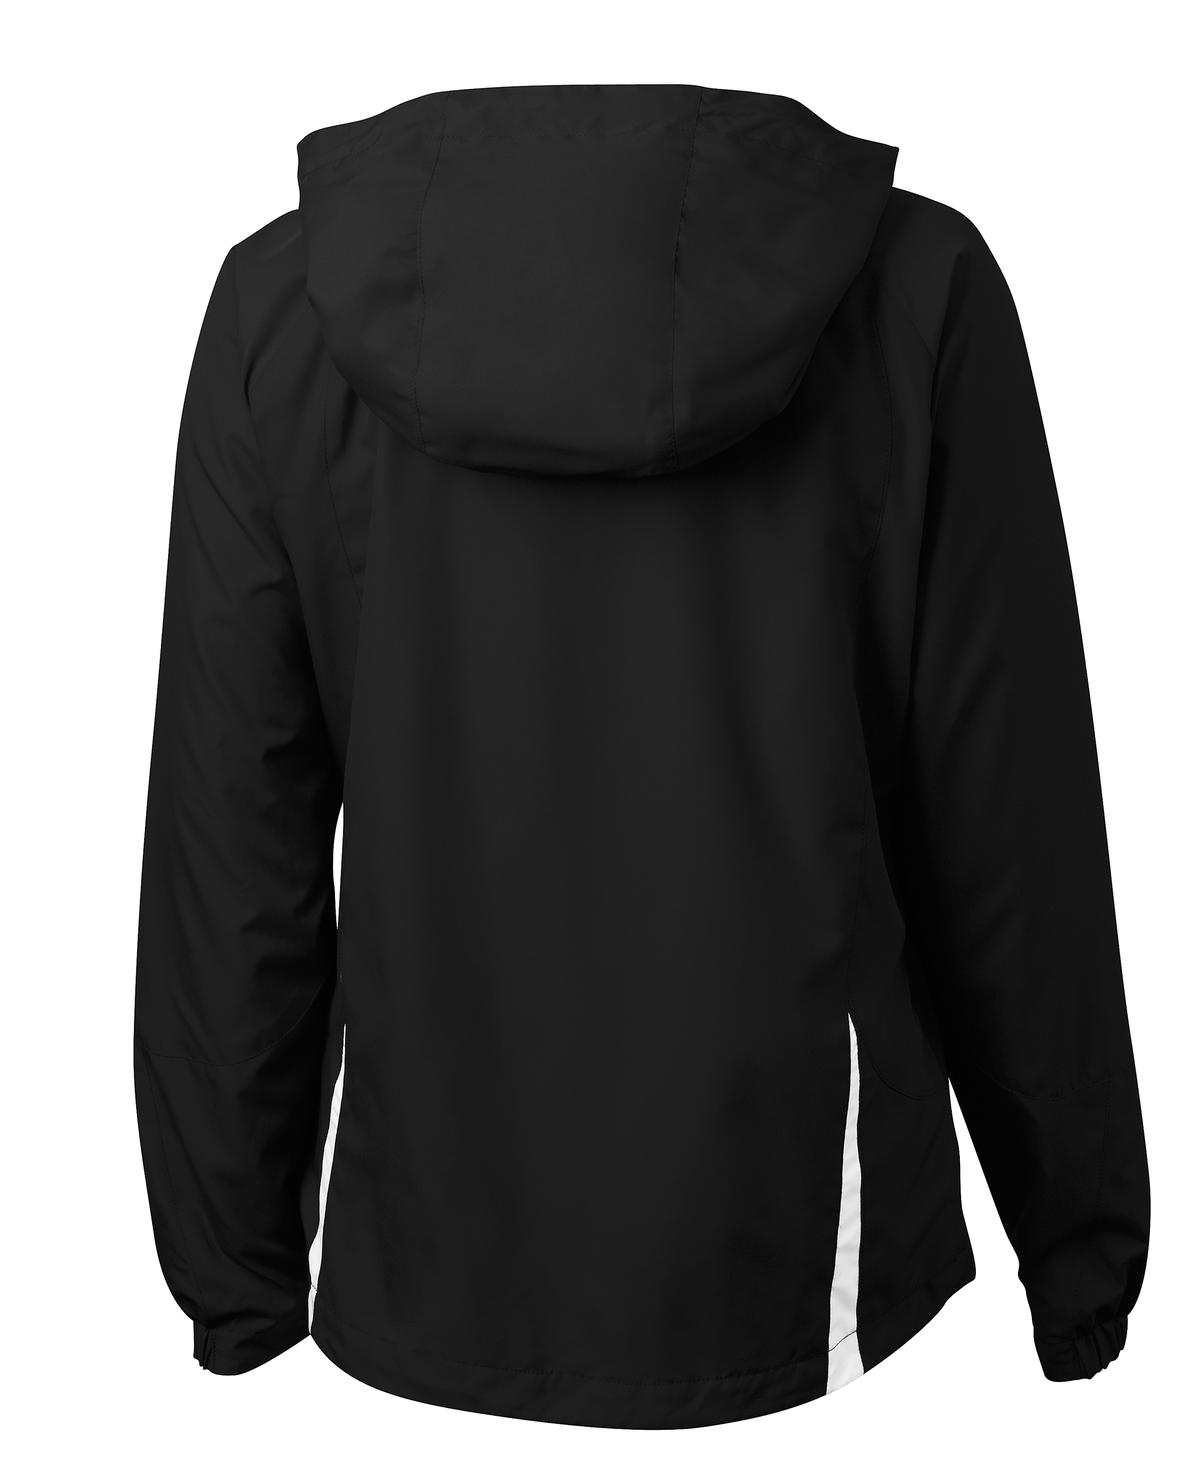 Mafoose Women's Colorblock Hooded Raglan Jacket Black/White-Back